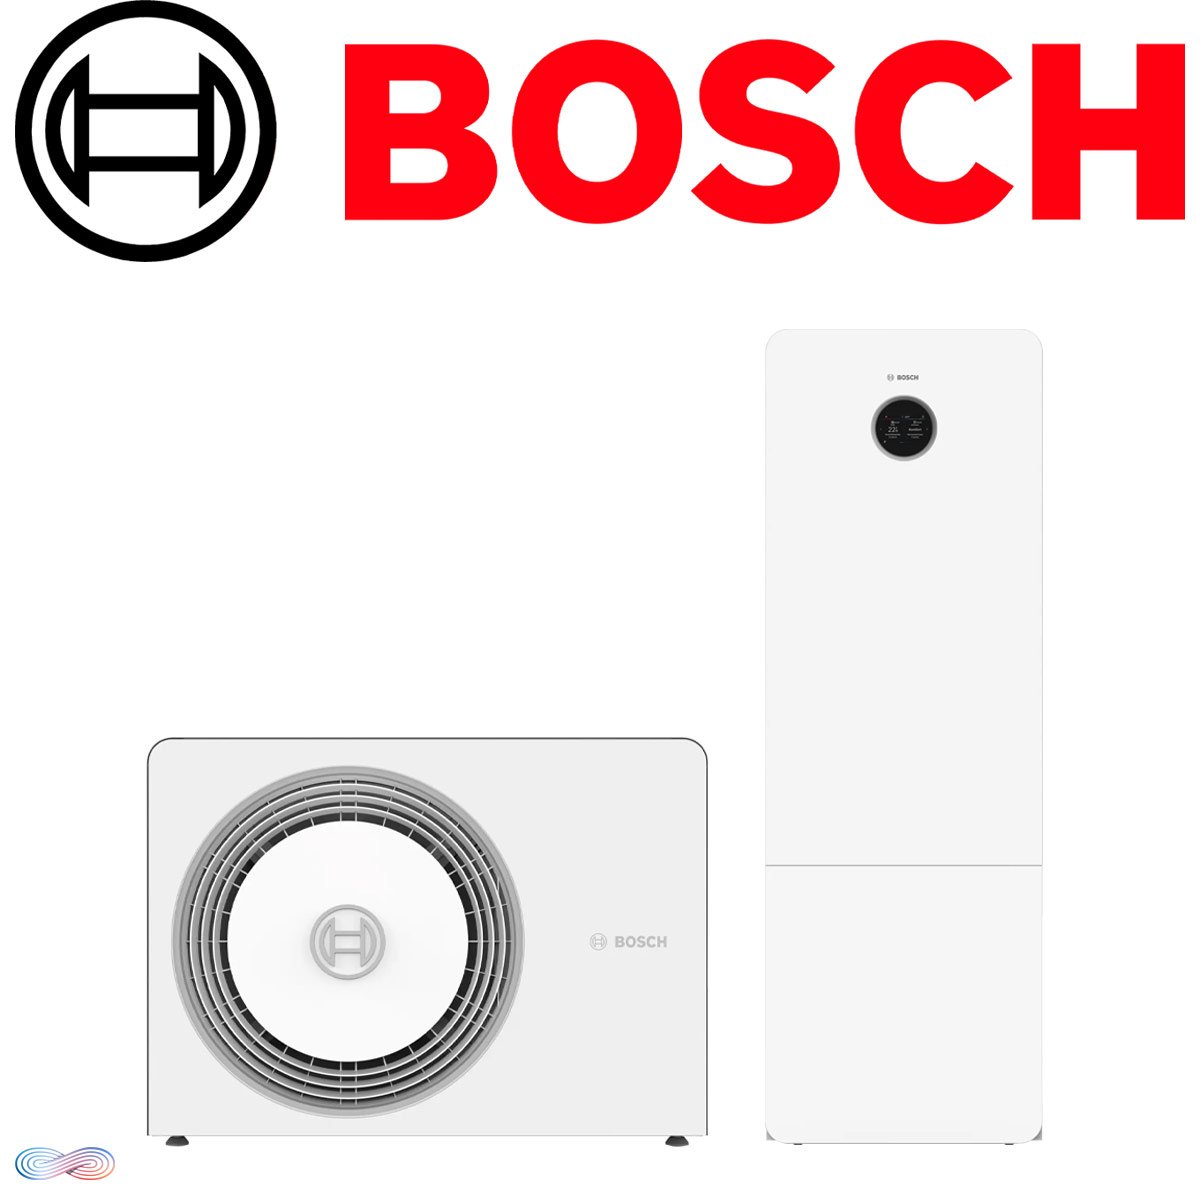 Bosch Compress 5800i AW